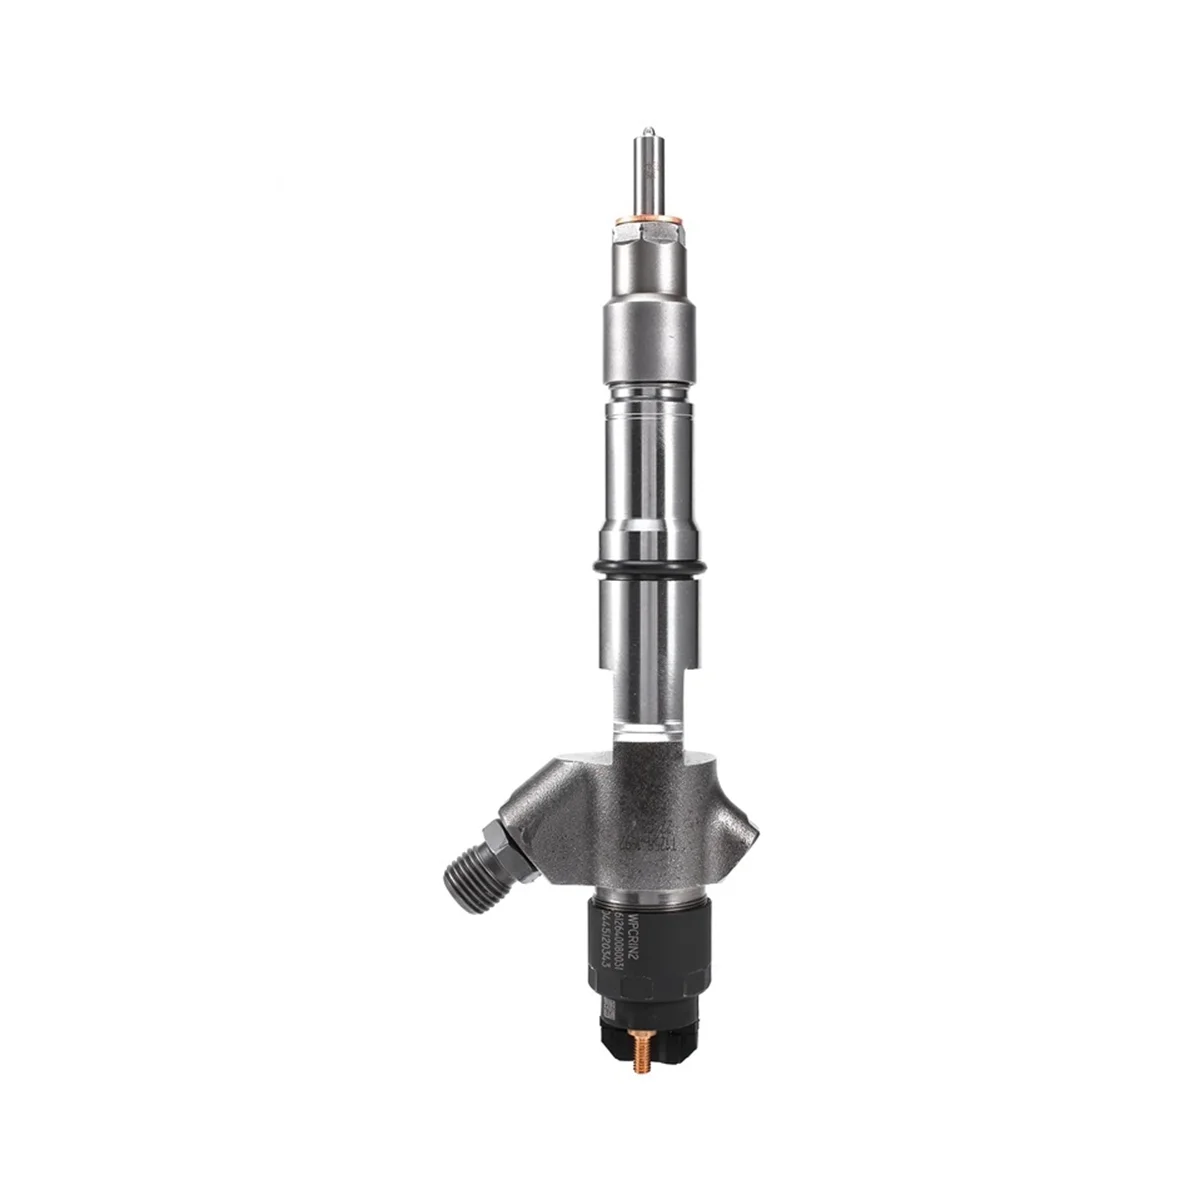 

0445120343 New Common Rail Crude Oil Fuel Injector Nozzle for Bosch for WEICHAI WD-10 EU4